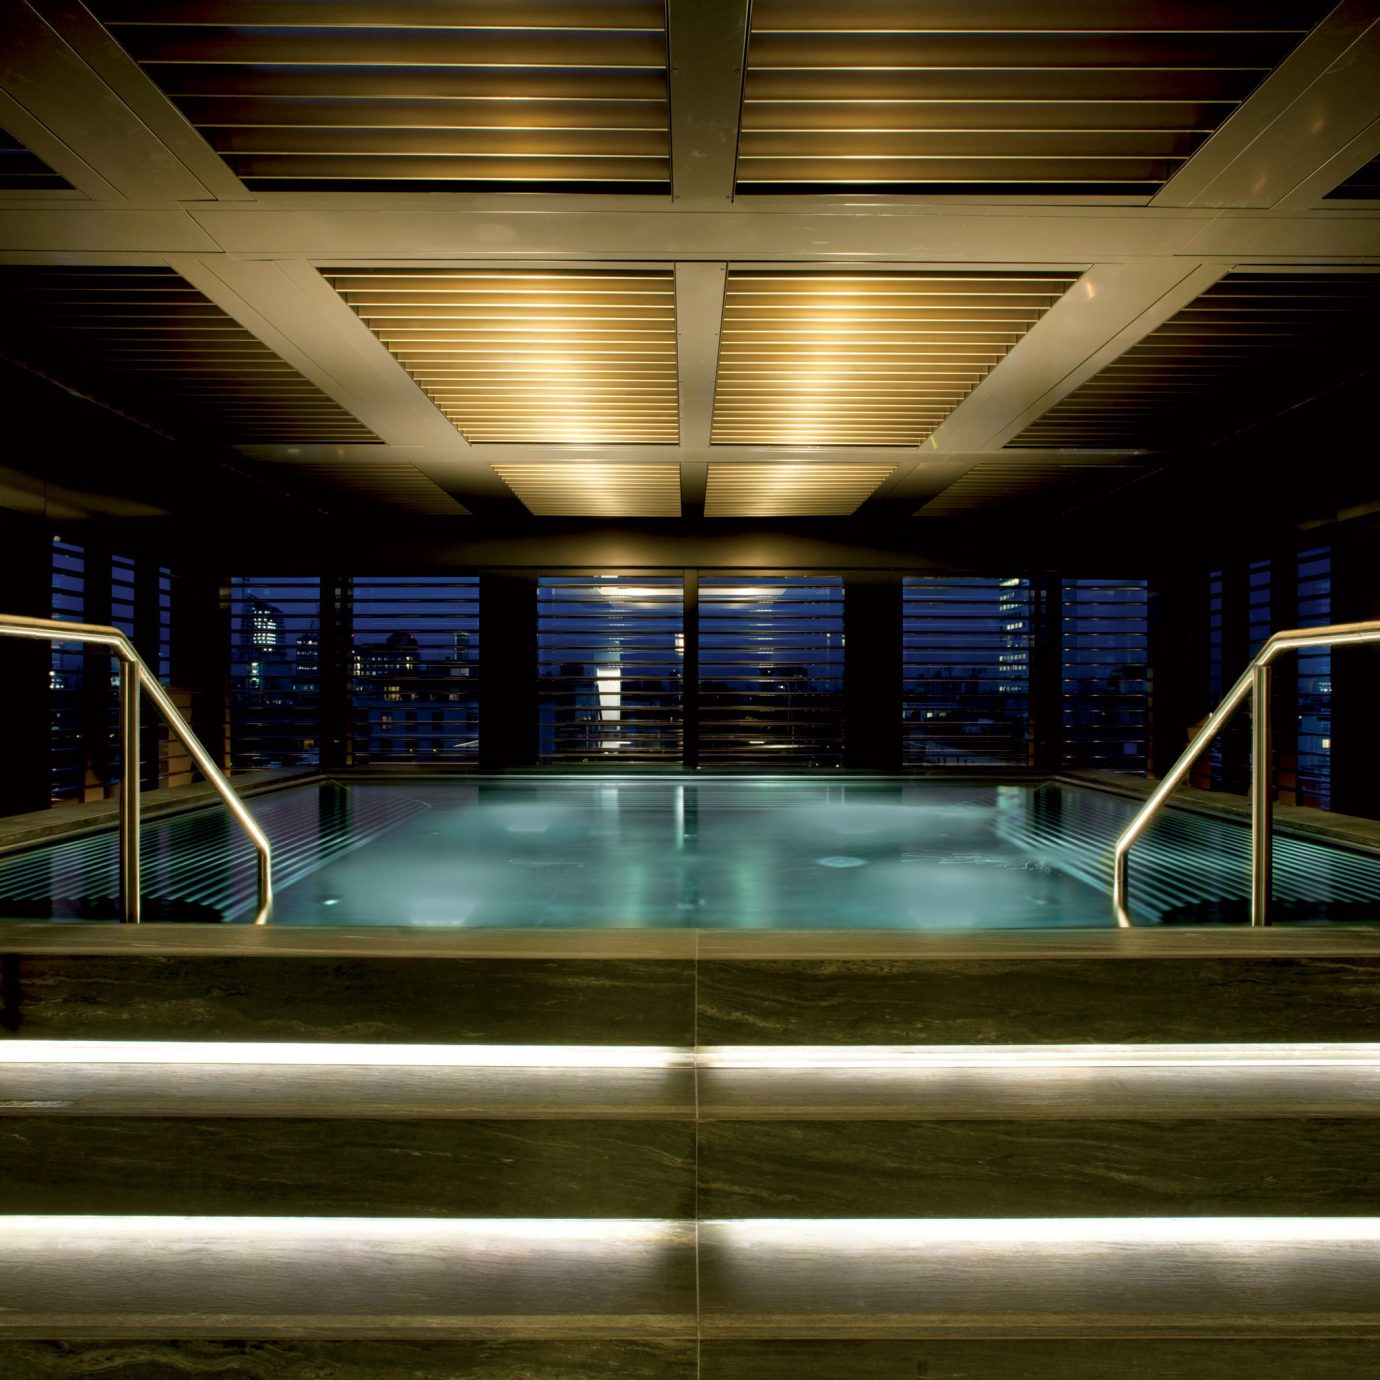 Elegant Hotels Italy Luxury Milan Pool Scenic views night light Architecture swimming pool lighting subway